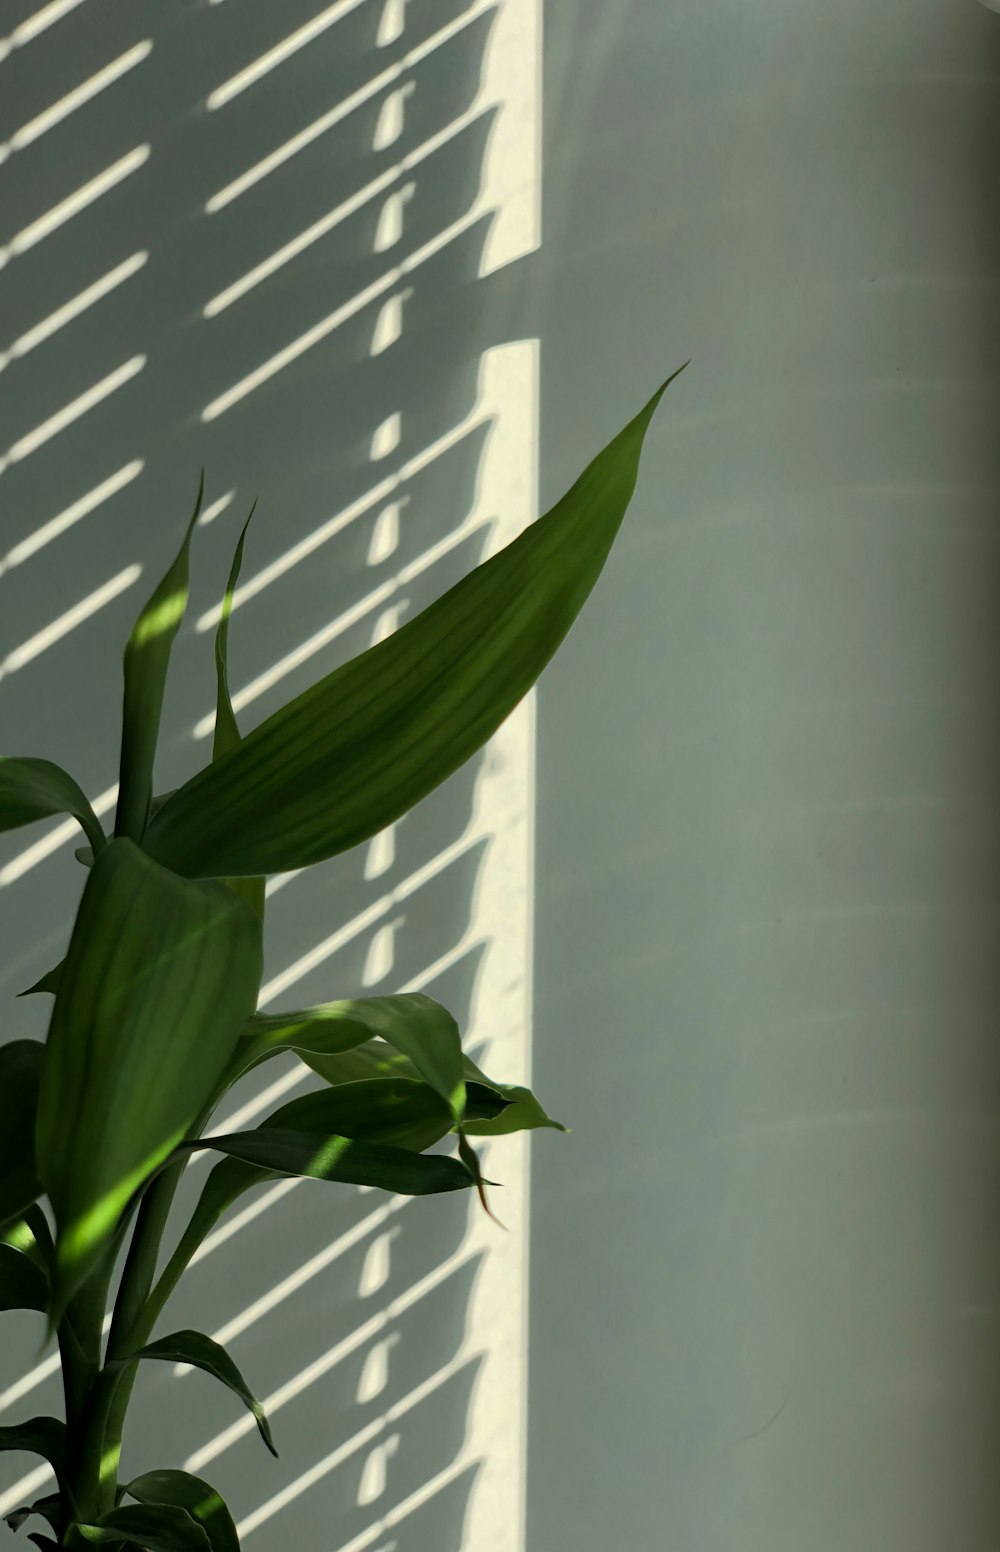 green plant near white window blinds